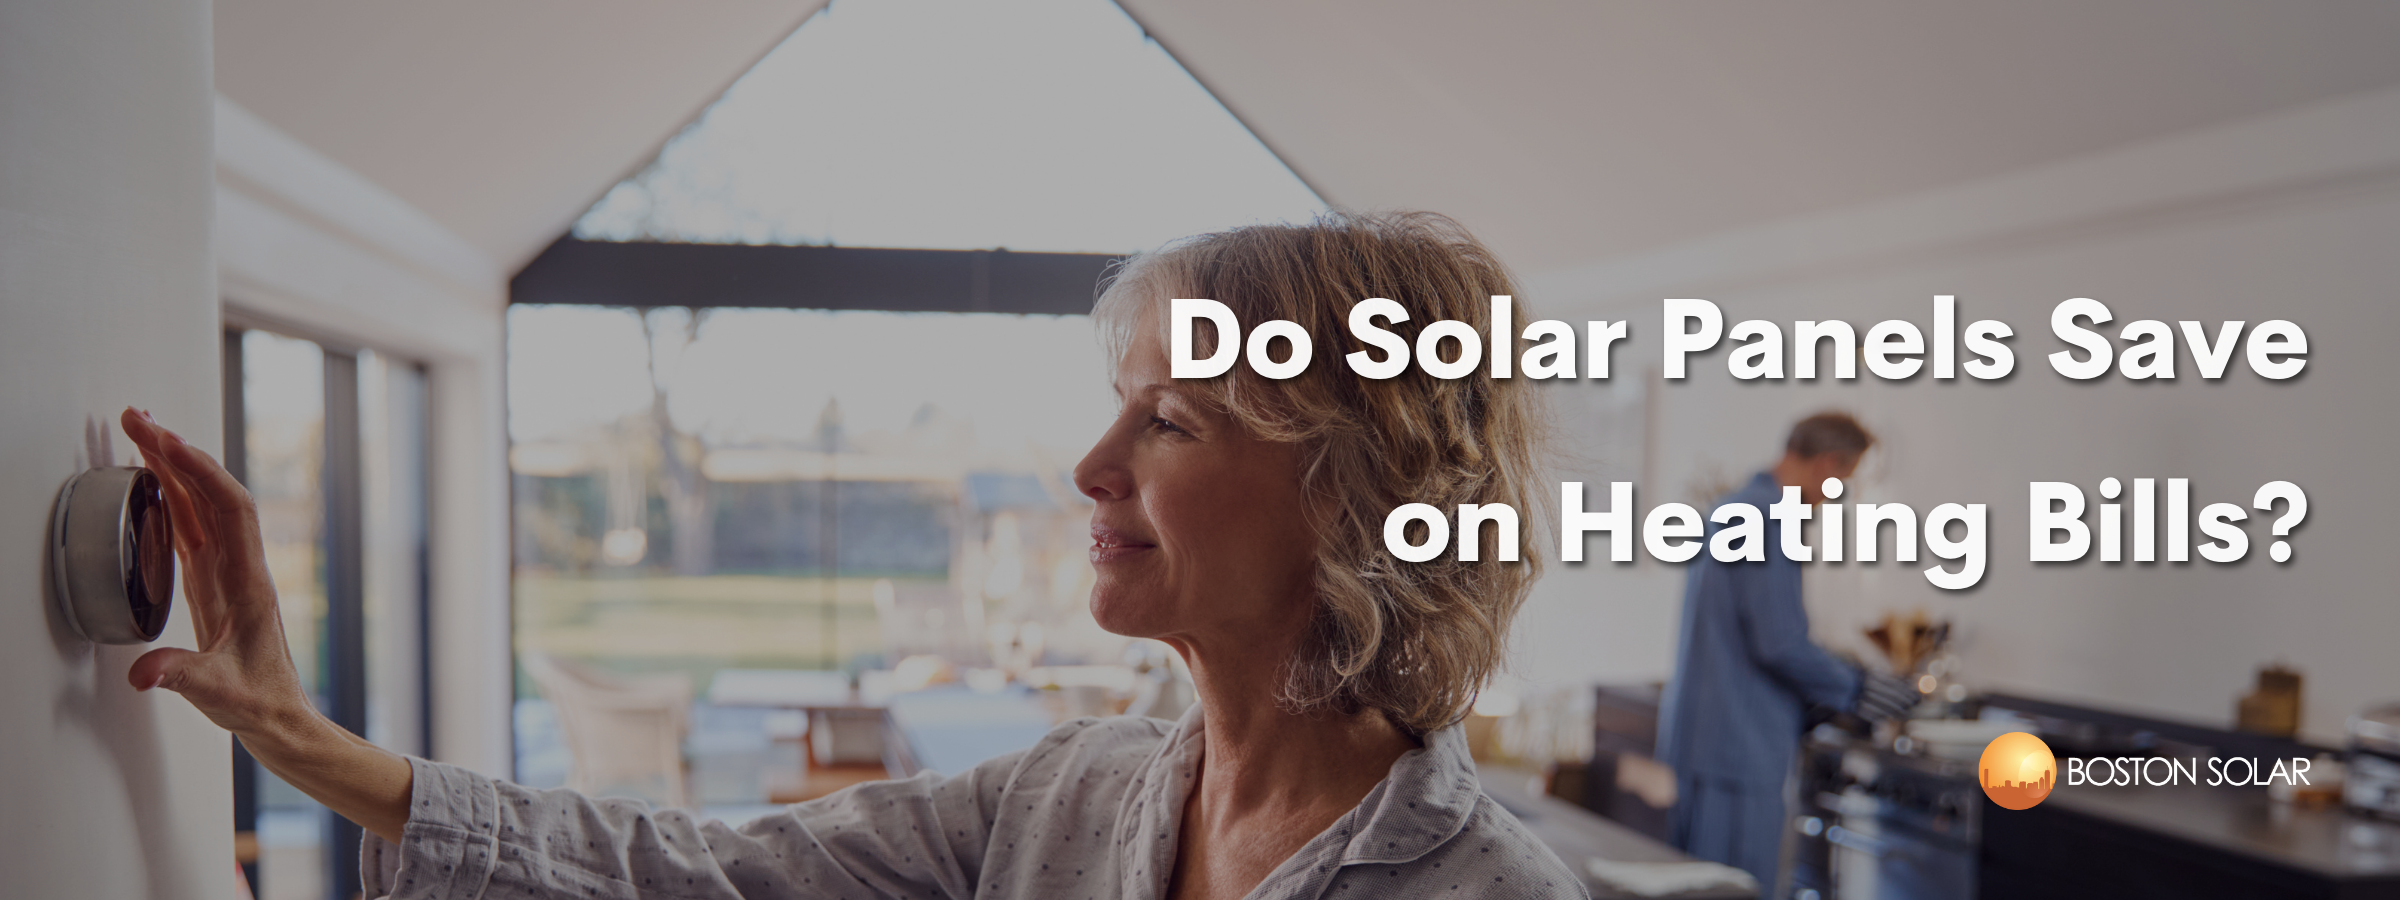 Do Solar Panels Save on Heating Bills?